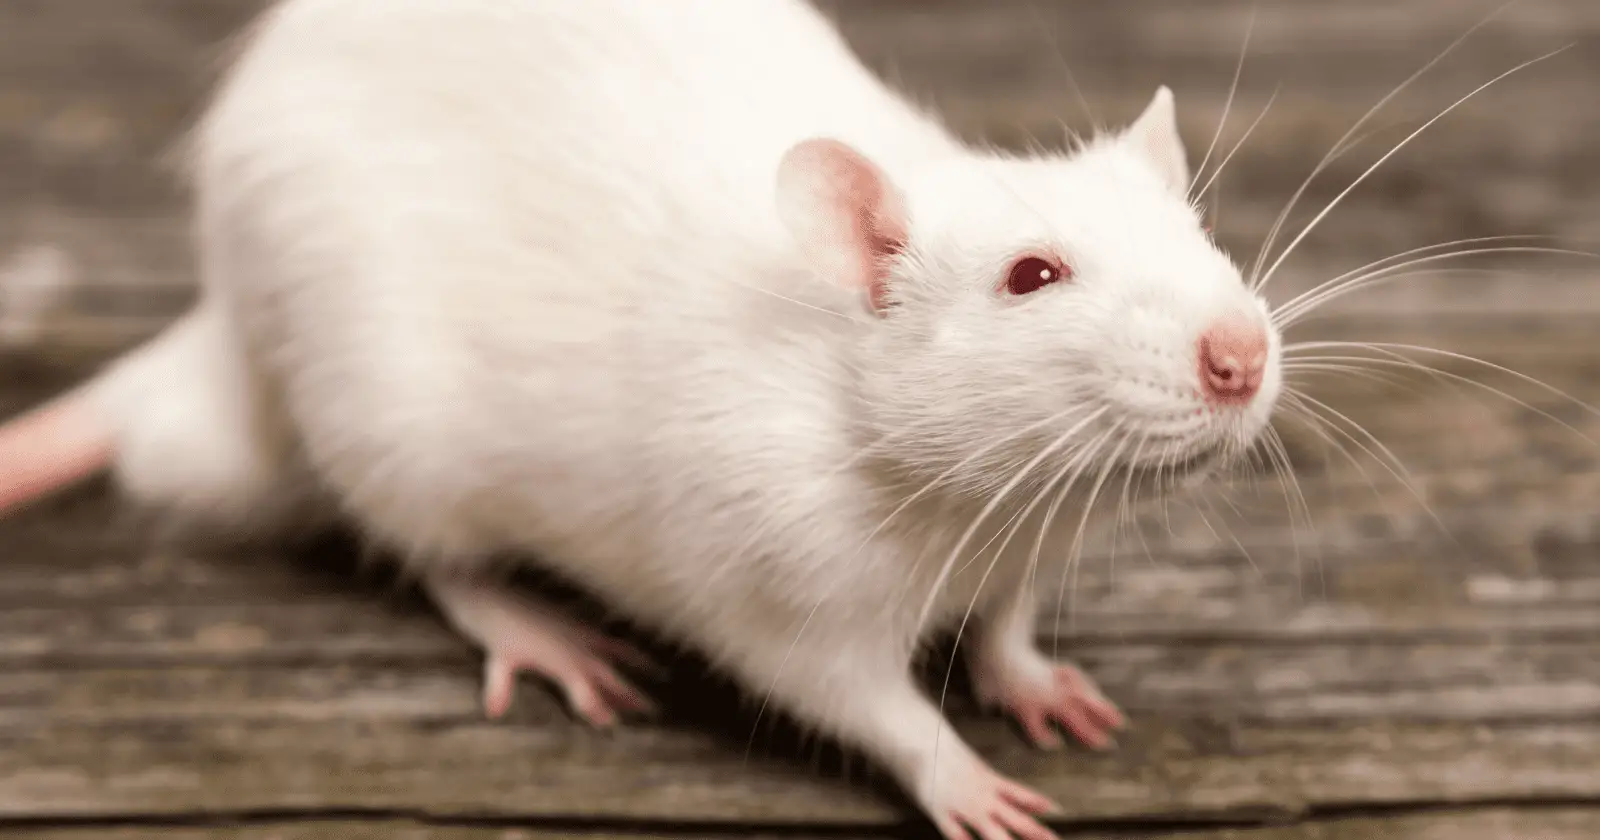 Are Rats Good Pets?